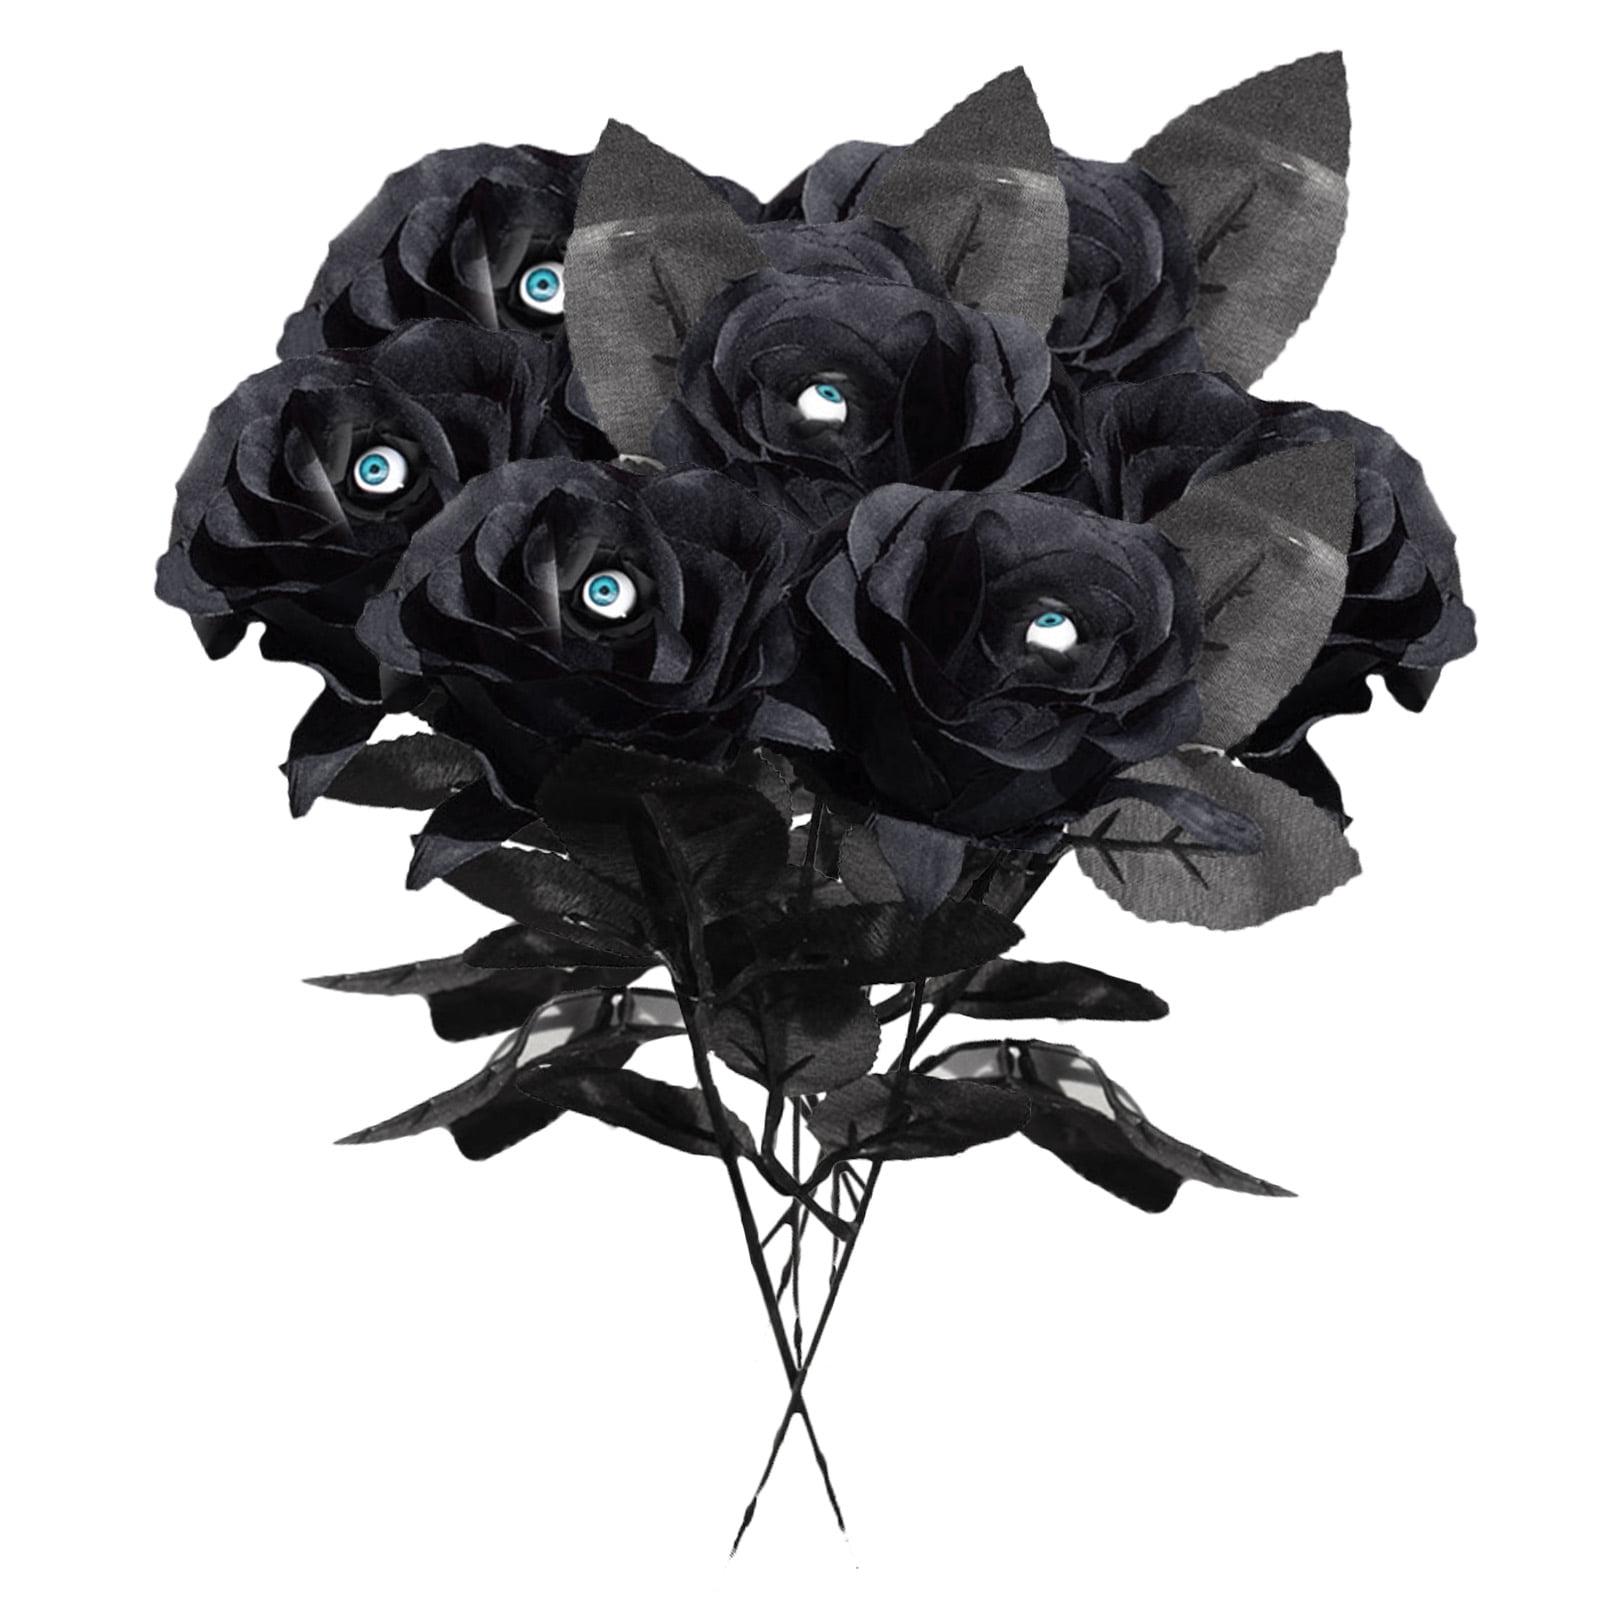 YaoX Black Wild Jamaica Cartoon Artificial Rose Flower Hanging Vases Decoration Bottle